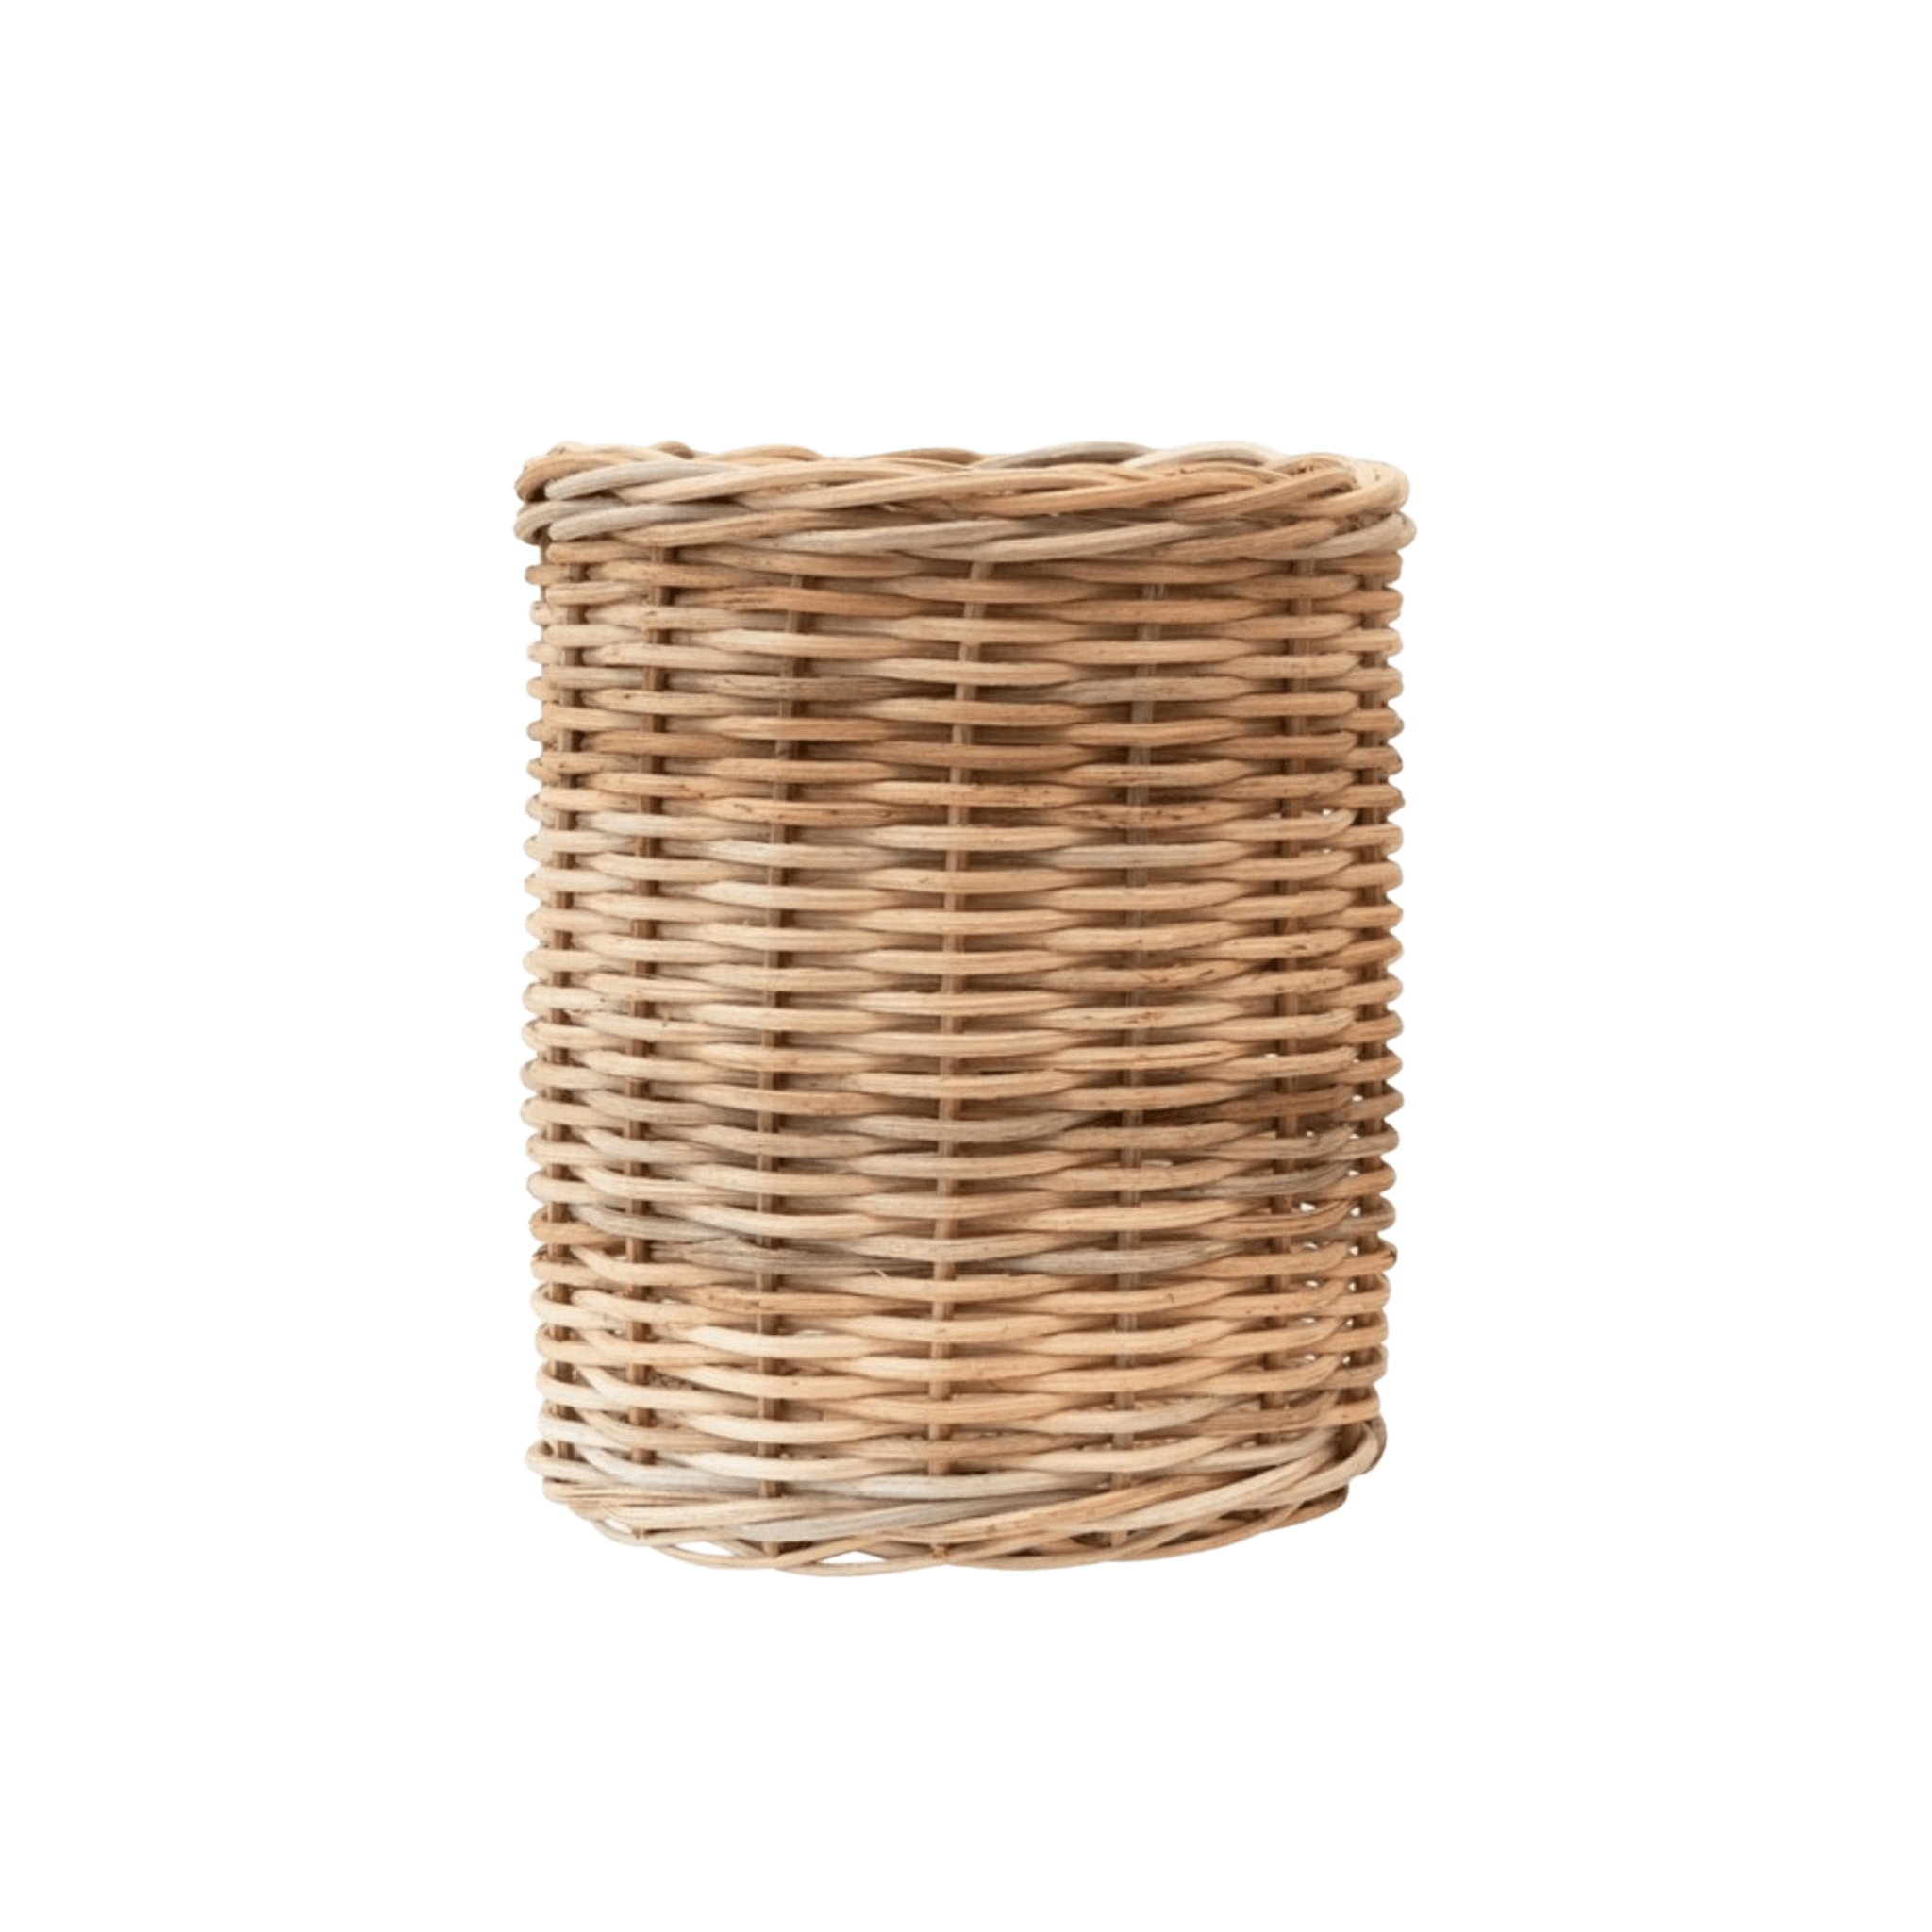 Natural Wicker Basket - Foundation Goods